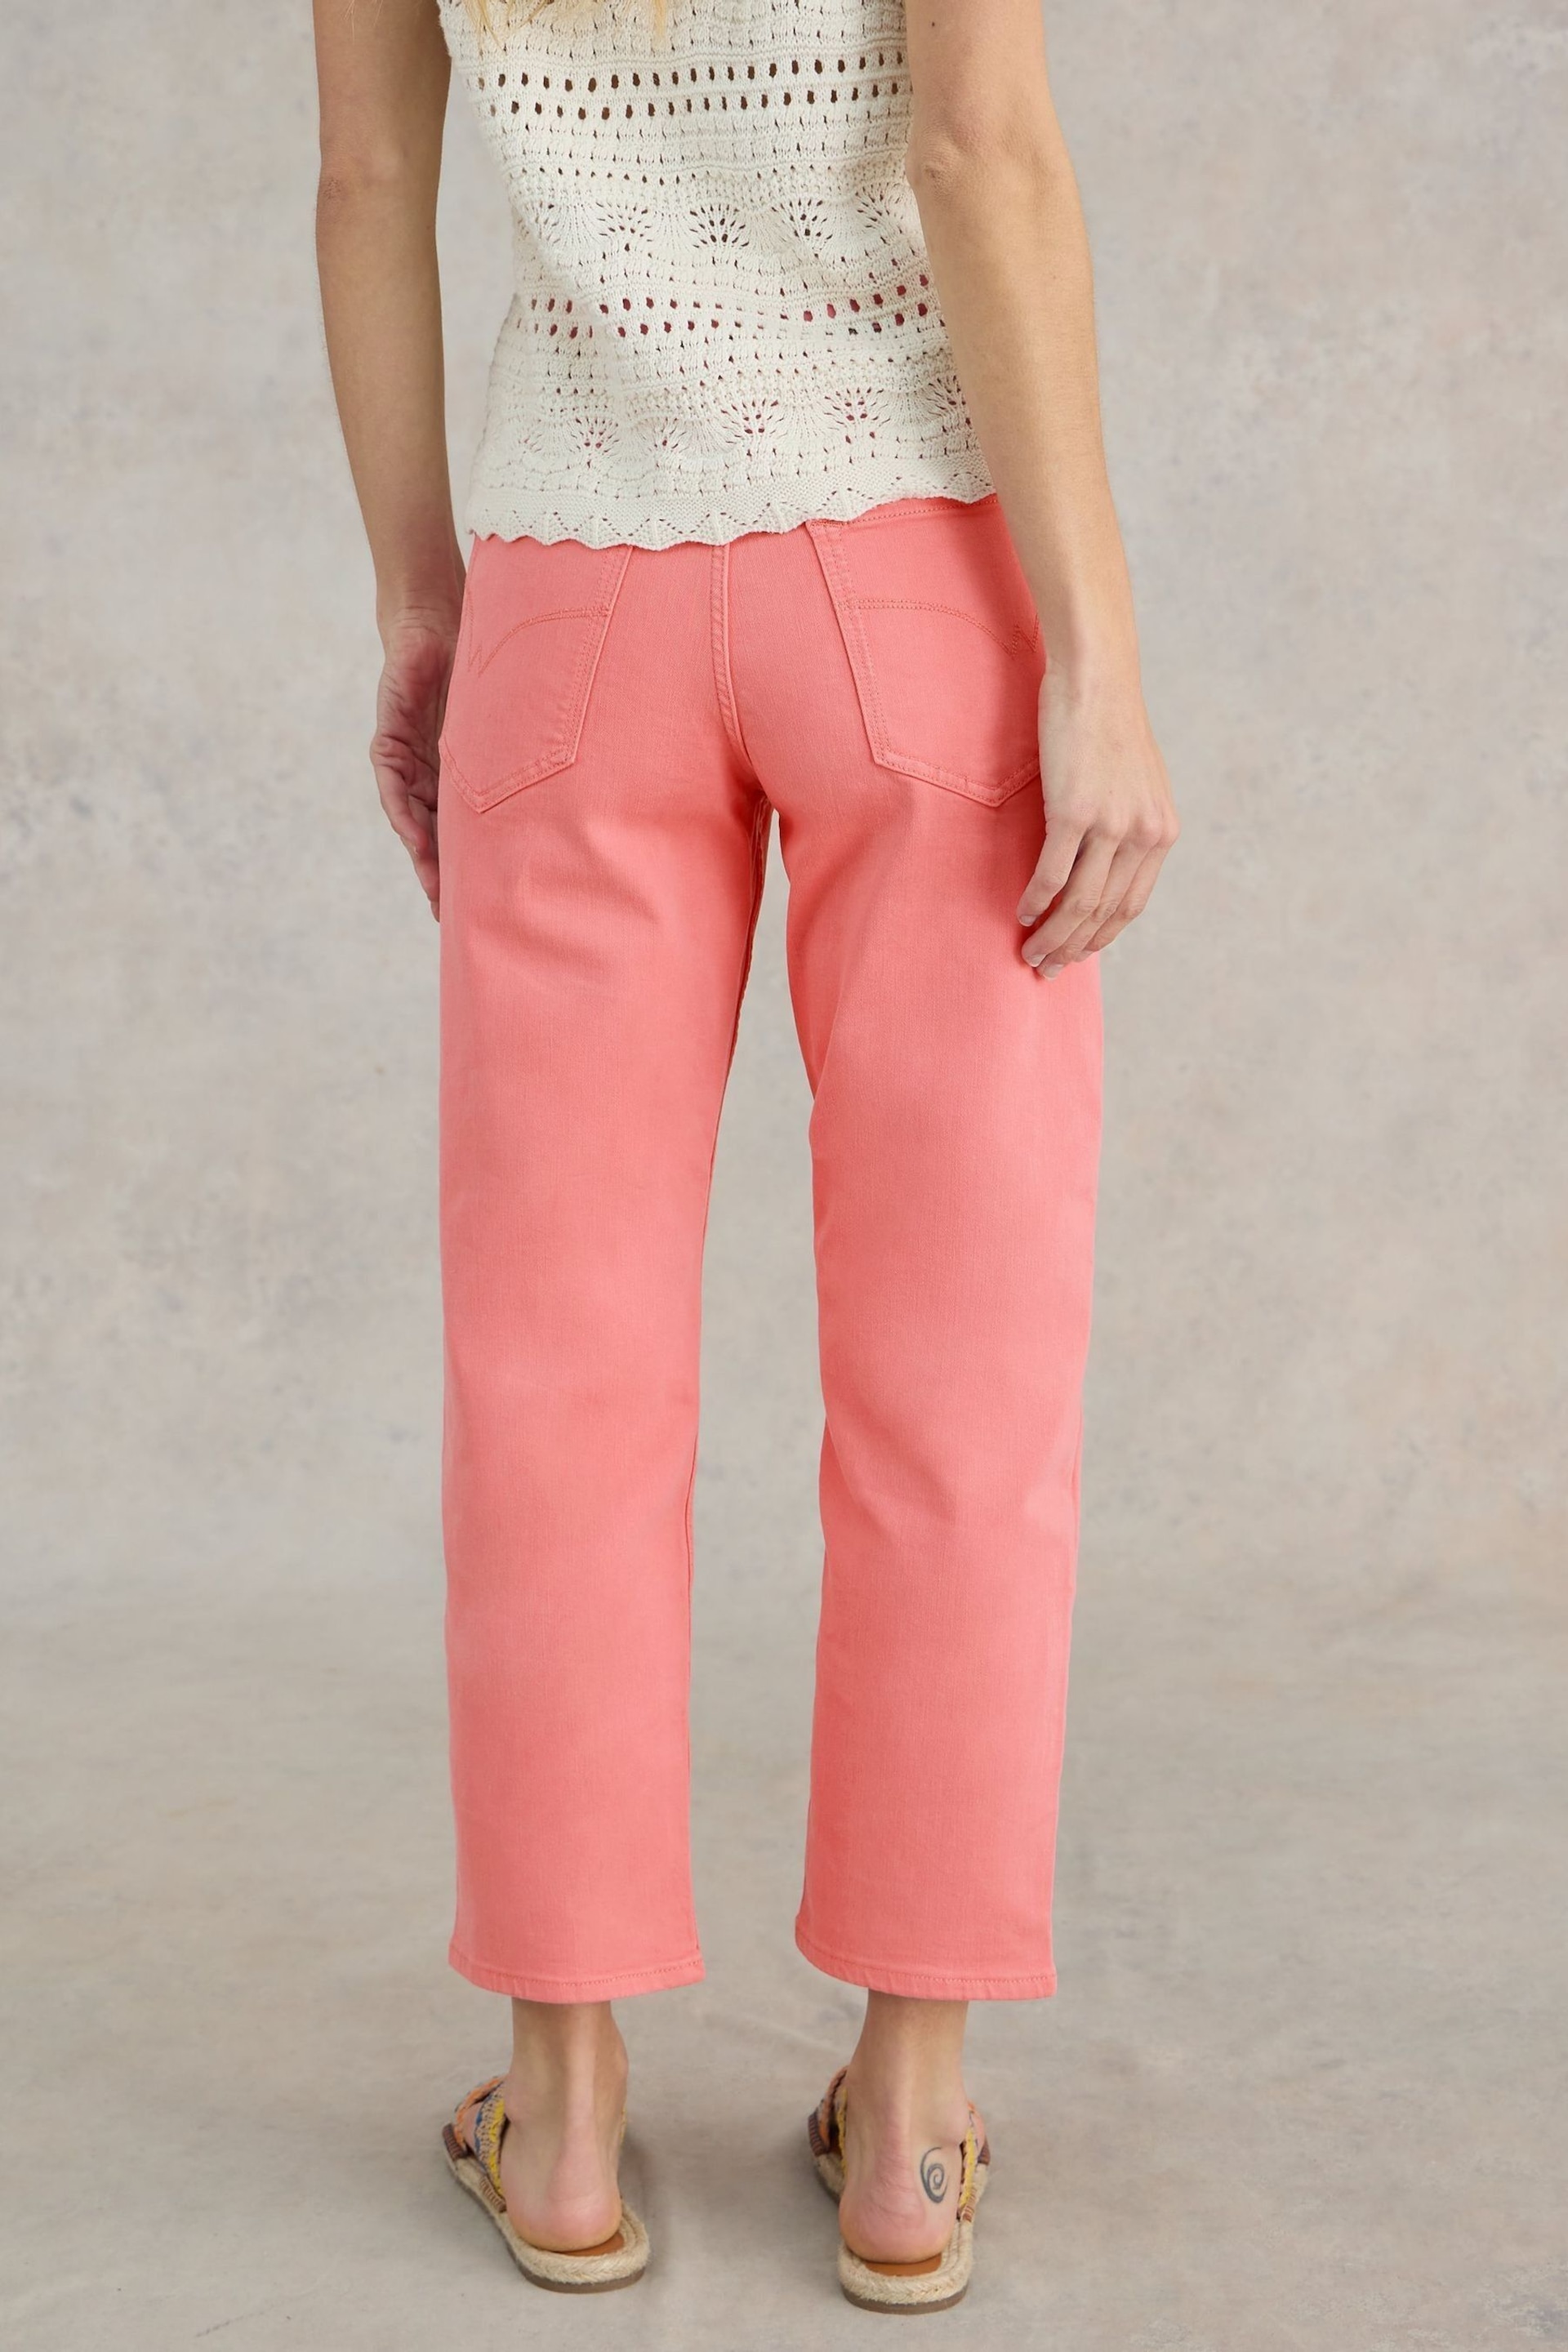 White Stuff Pink Blake Straight Crop Jeans - Image 2 of 7